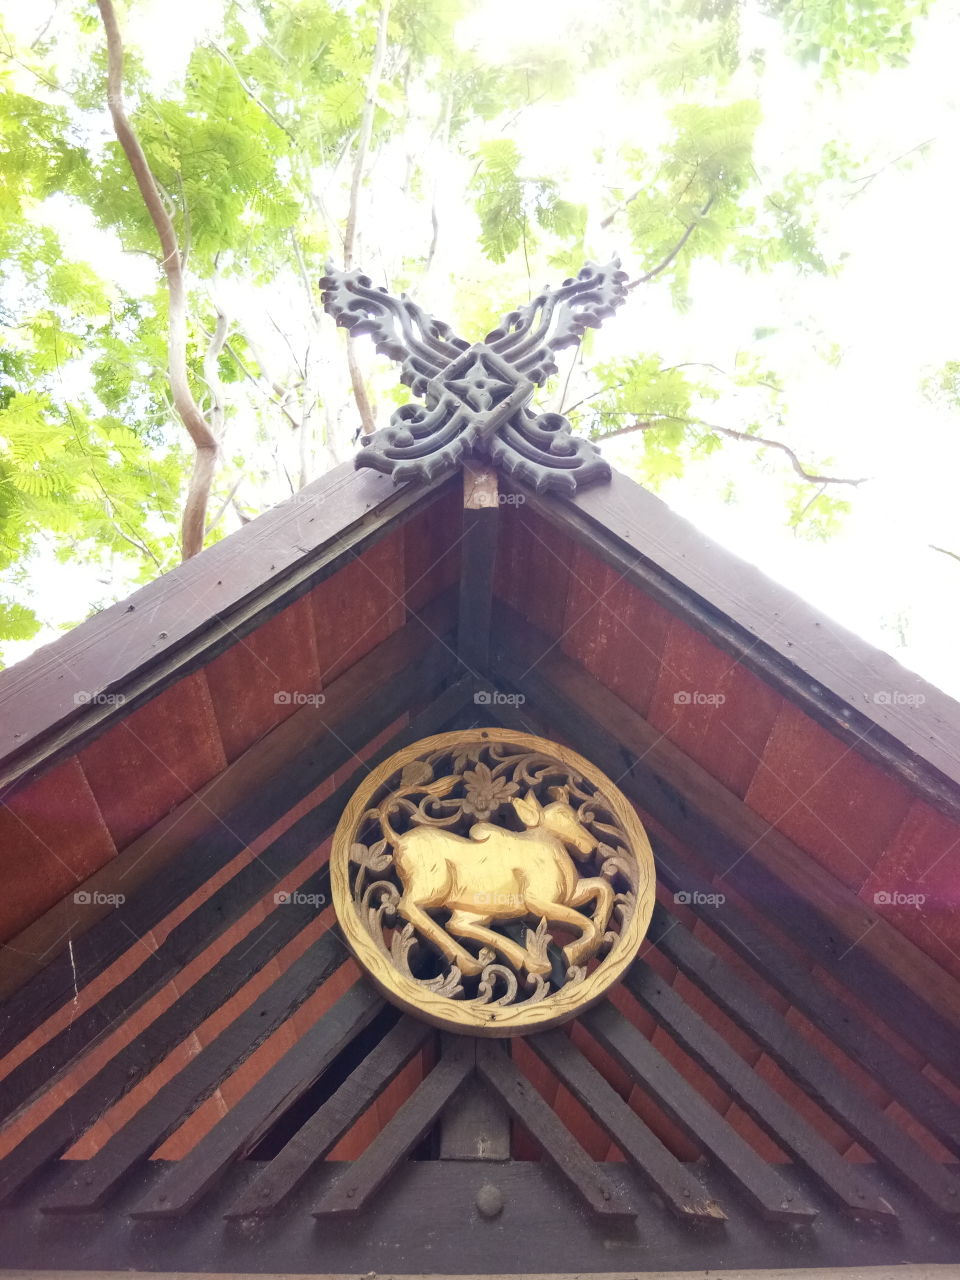 art
wood
Thailand
house